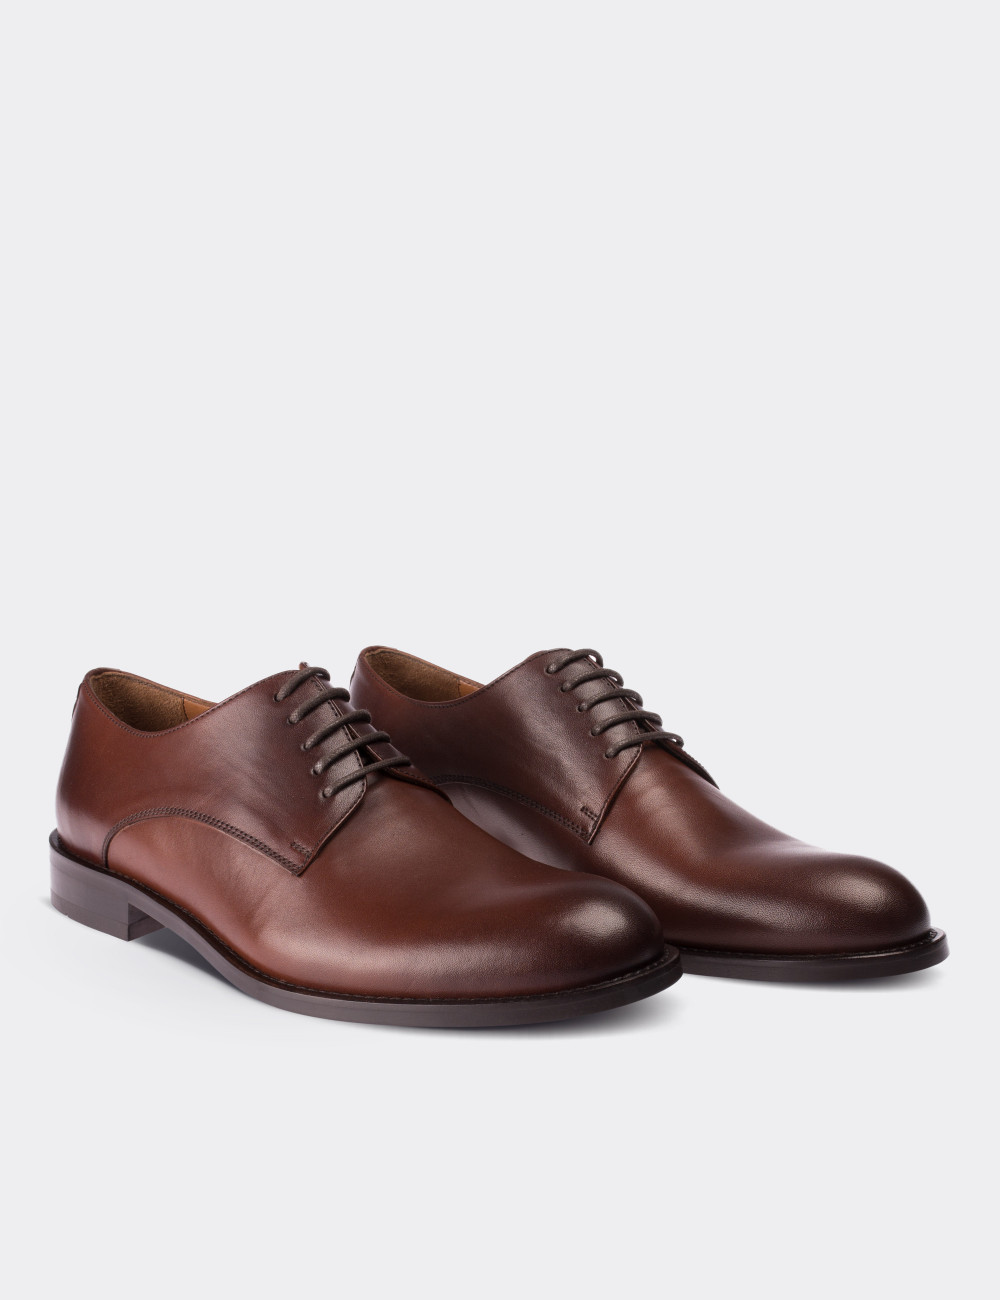 Tan  Leather Classic Shoes - 64910MTBAN02